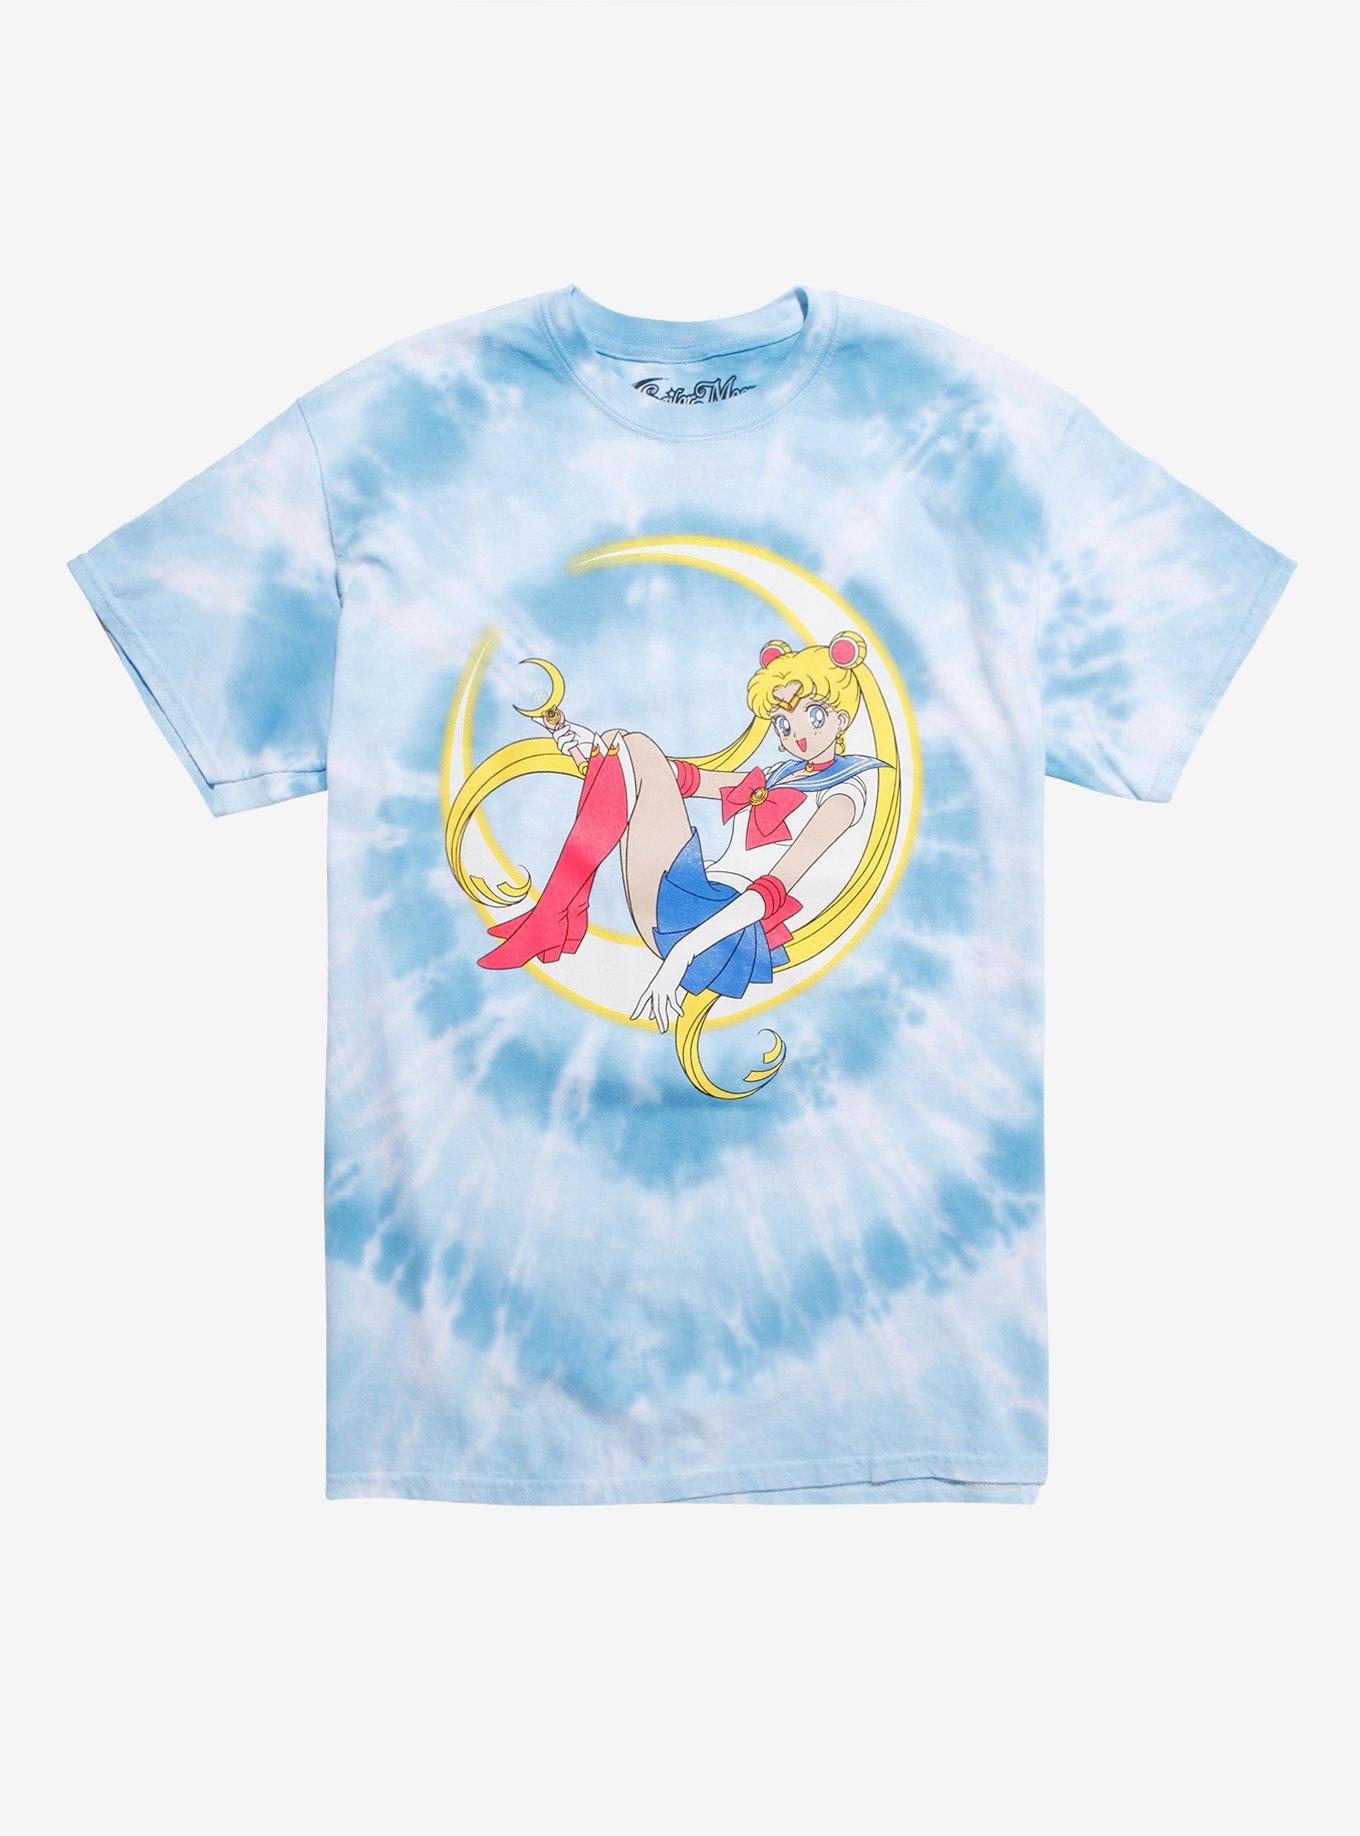 Sailor Moon Relaxing Blue & White Tie-Dye T-Shirt | Hot Topic